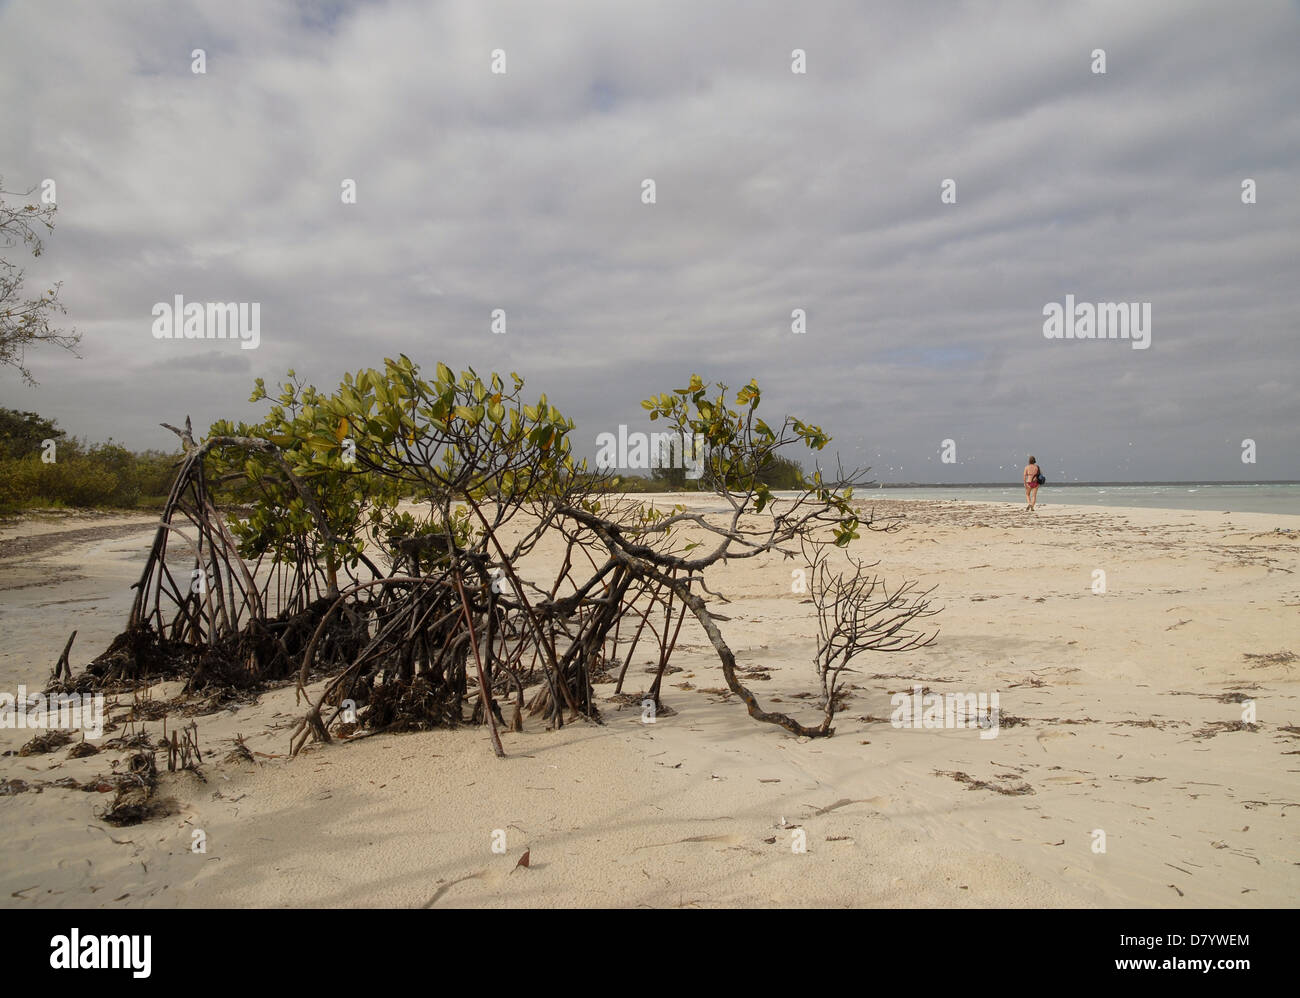 A beach in Cayo Coco, Cuba Stock Photo